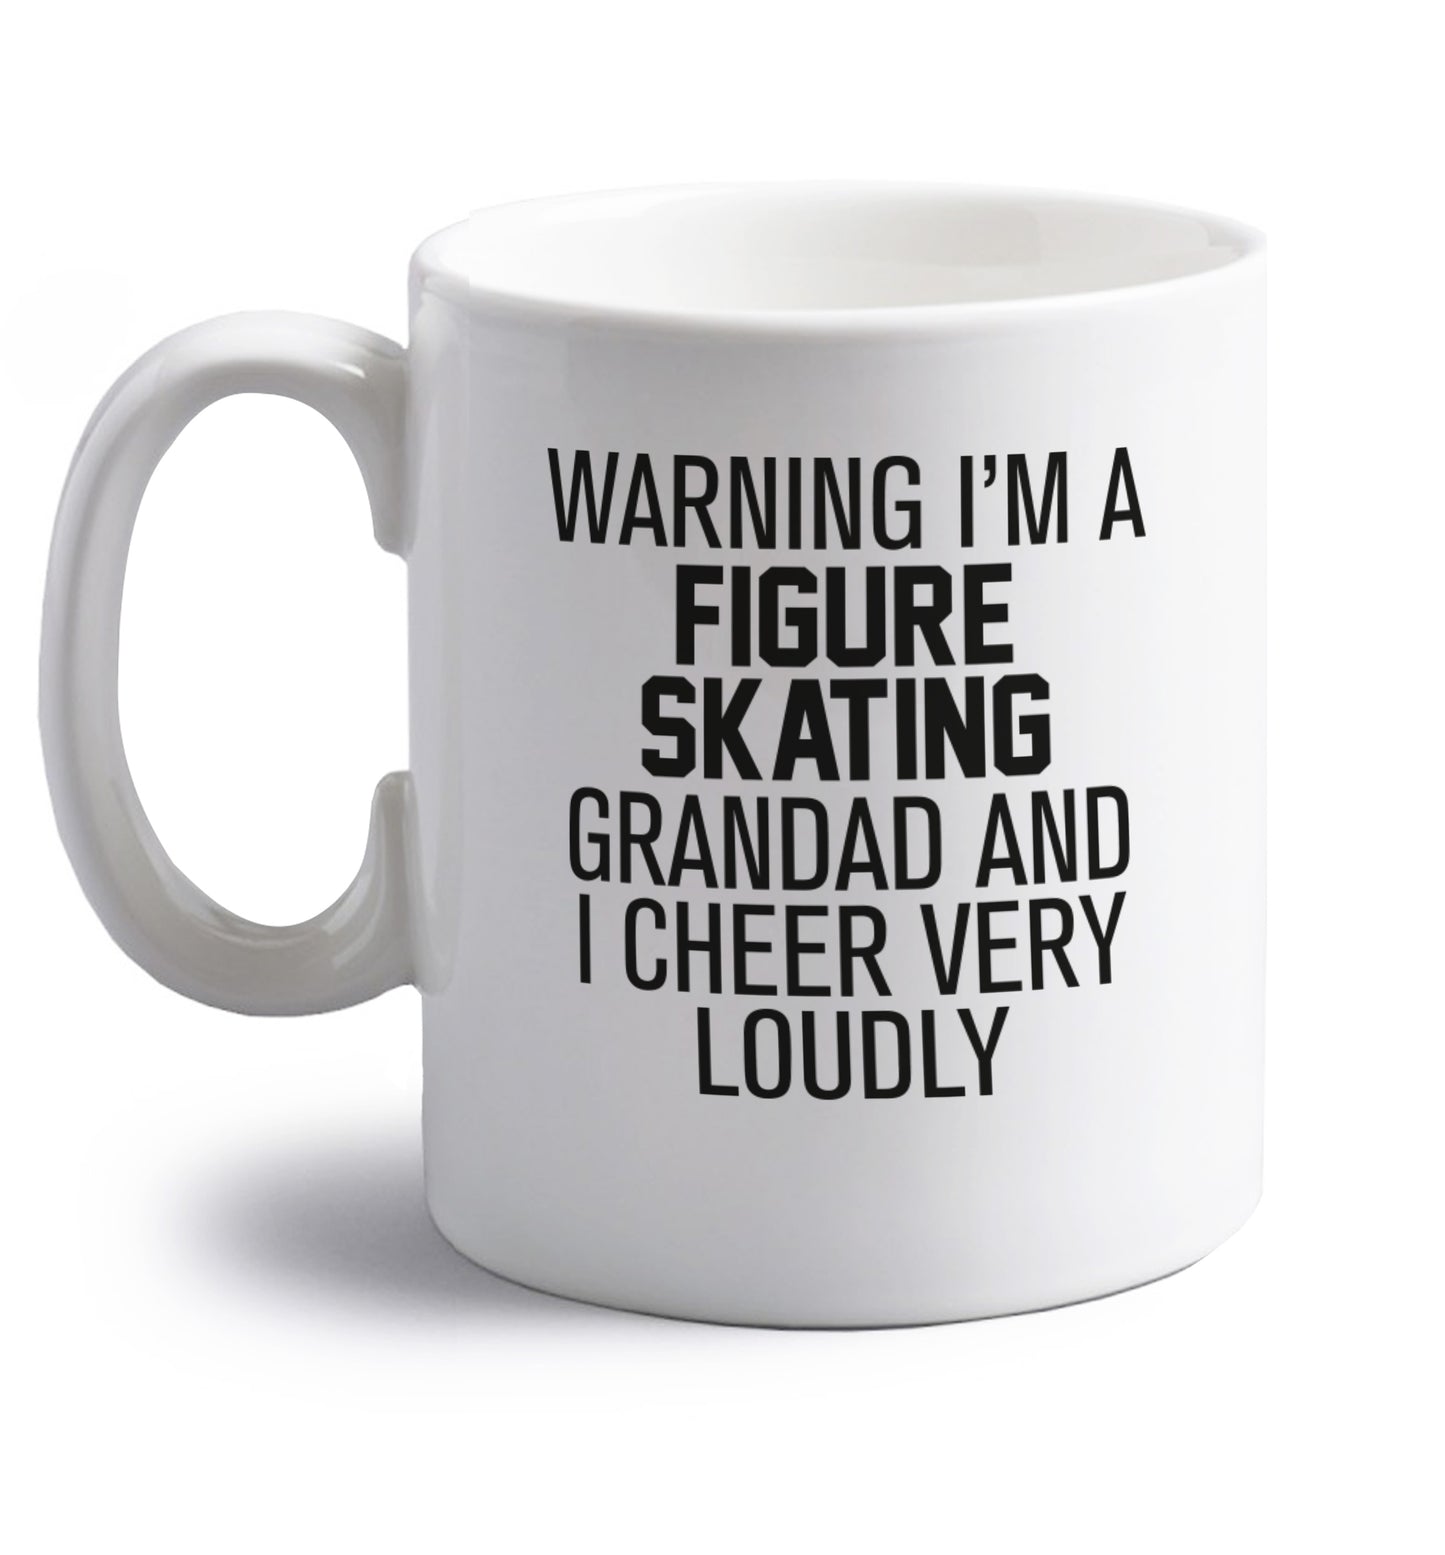 Warning I'm a figure skating grandad and I cheer very loudly right handed white ceramic mug 